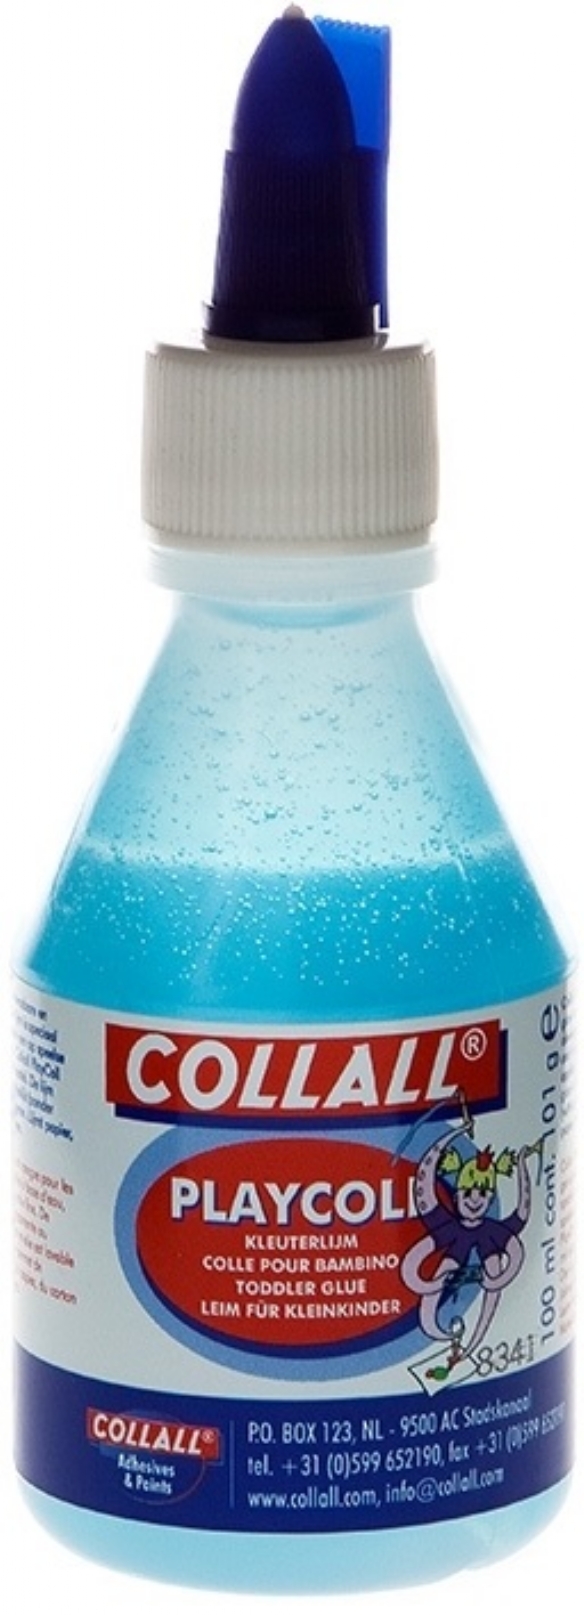 Collall playcoll kleuterlijm 100 ml